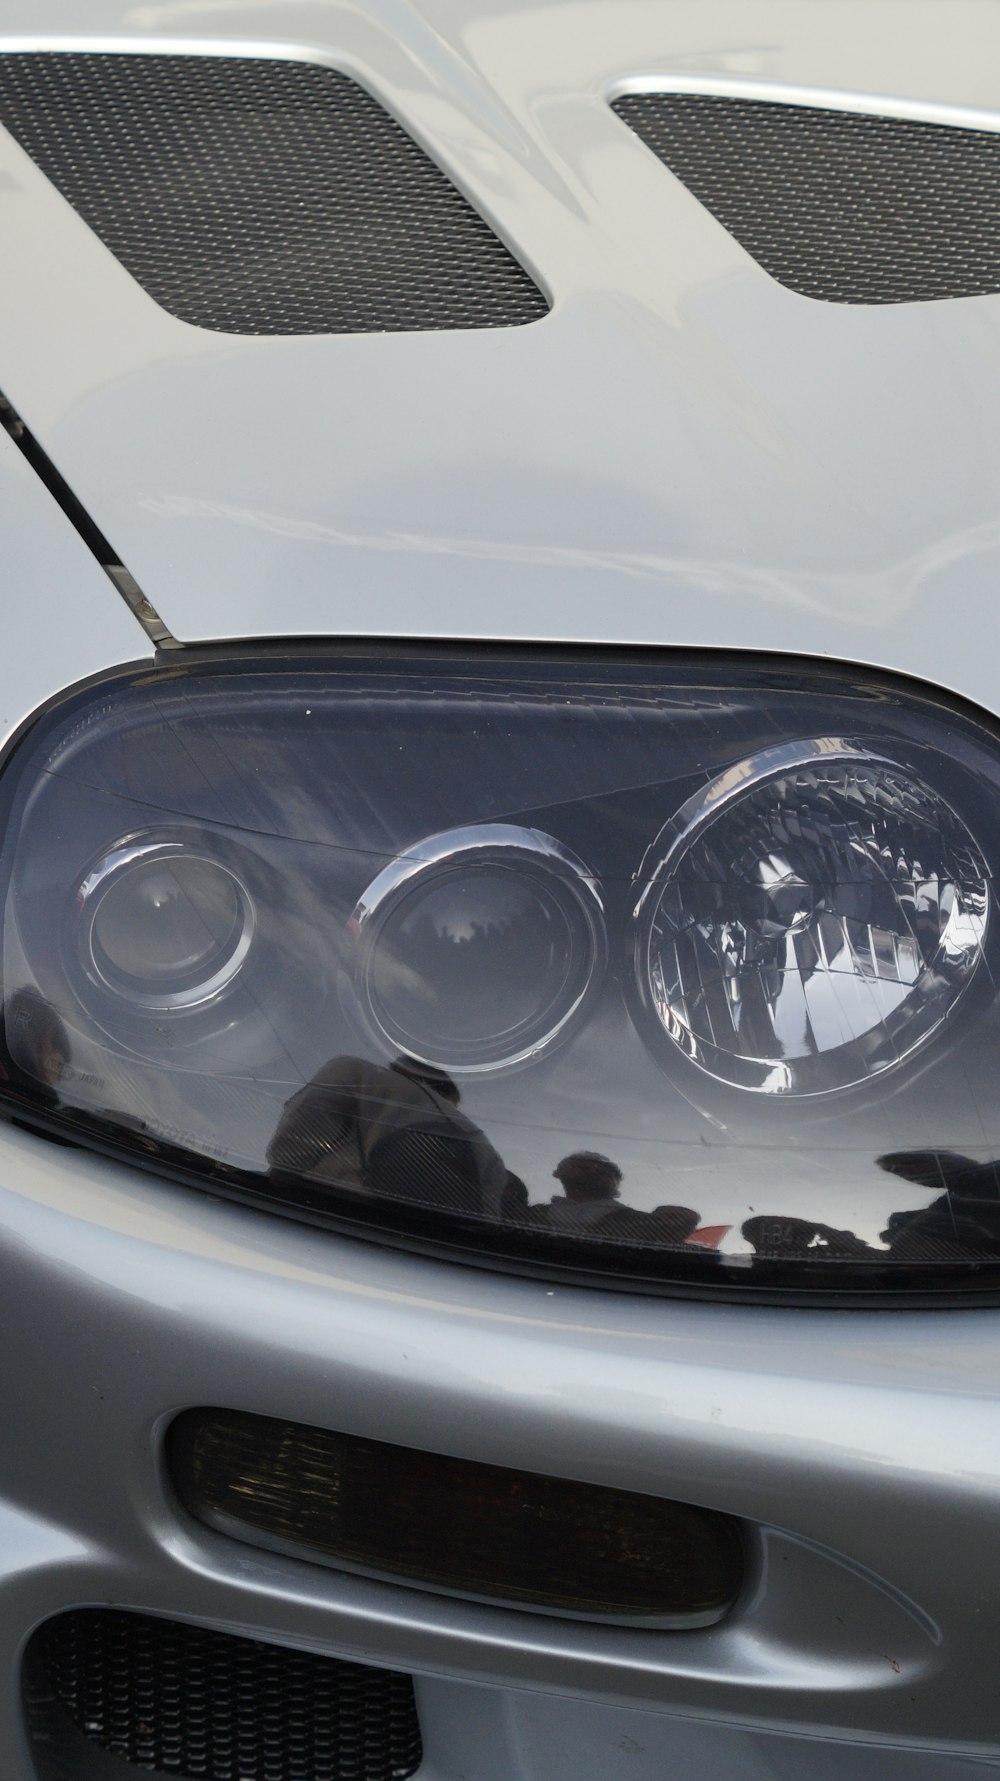 a close up of a headlight on a car